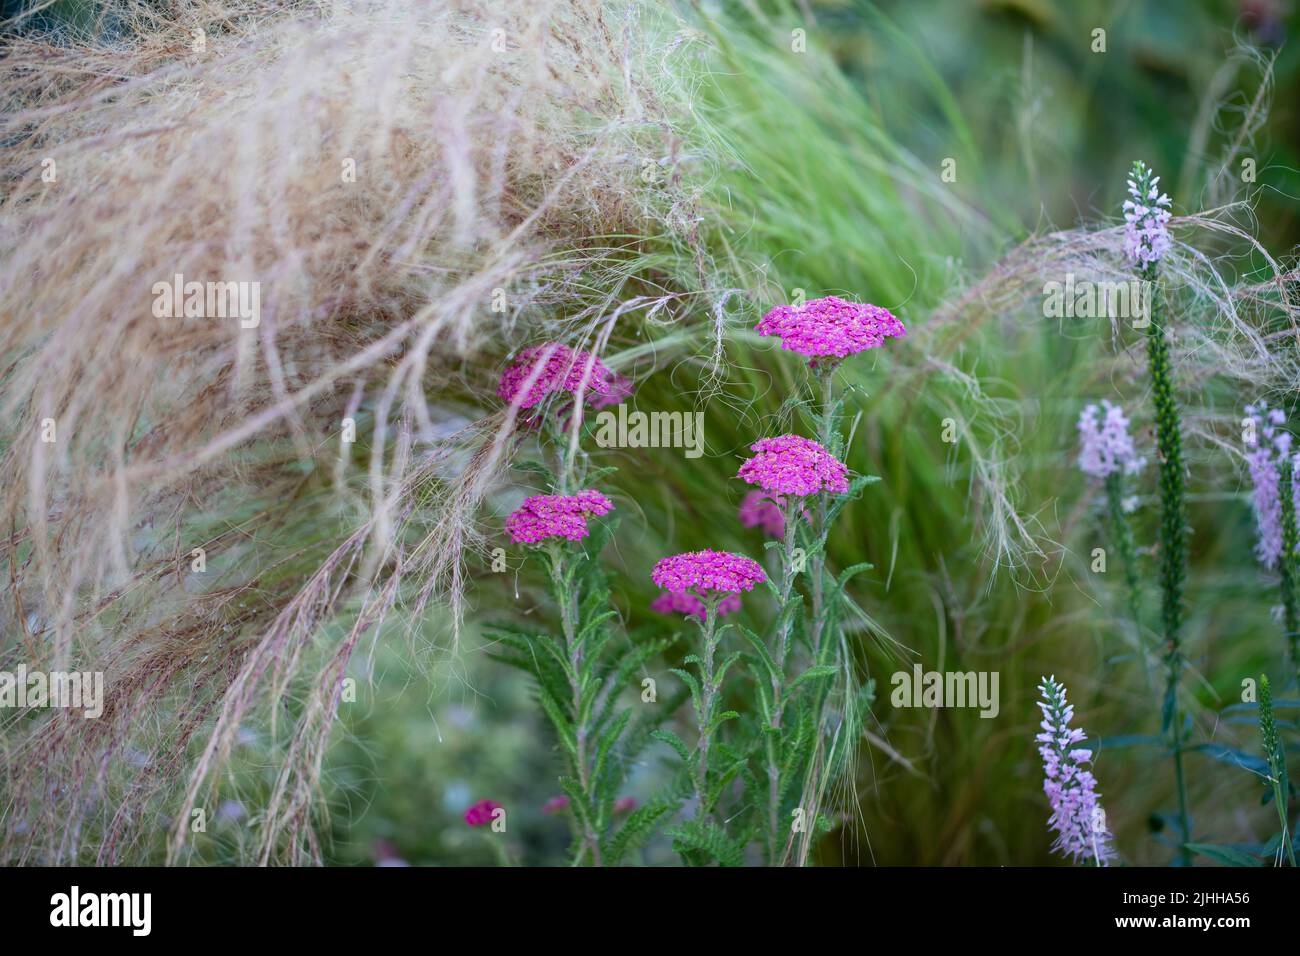 flower border with Achillea millefolium in the garden, shallow depth of field Stock Photo